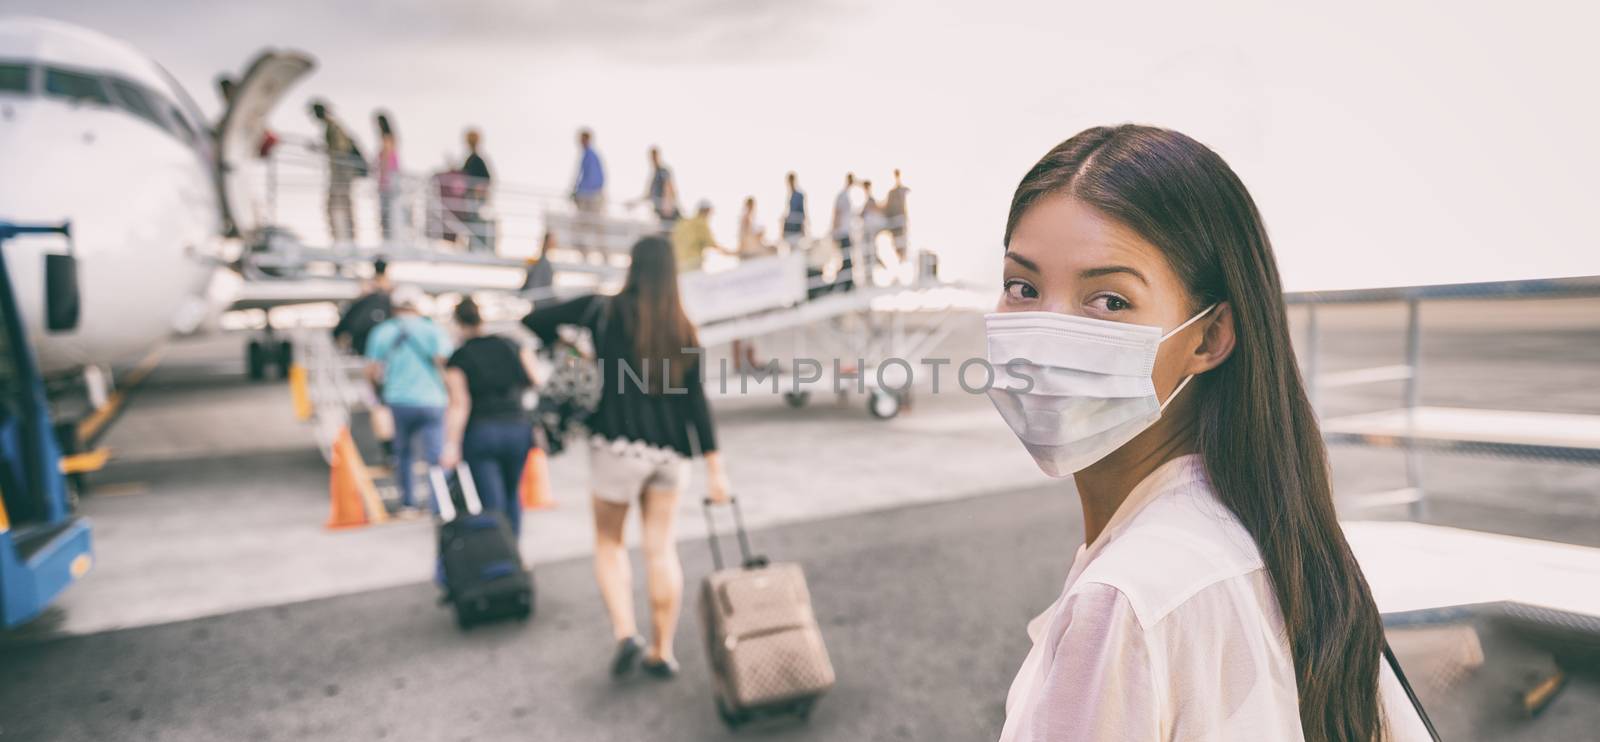 Airport Asian woman tourist boarding plane taking a flight in China wearing face mask. Coronavirus flu virus travel concept banner panorama by Maridav